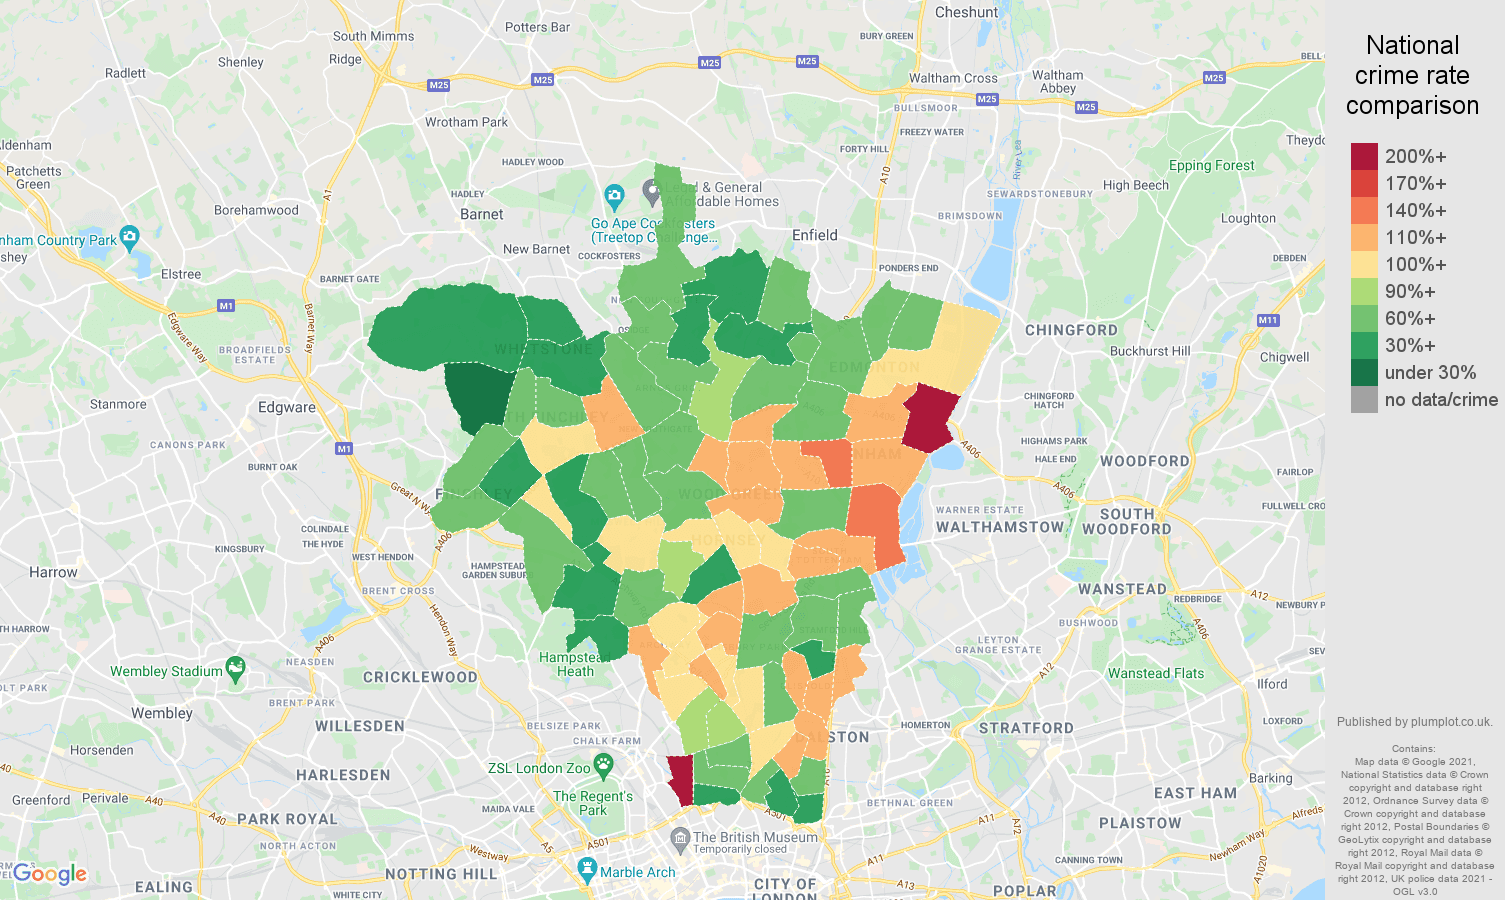 North London criminal damage and arson crime rate comparison map